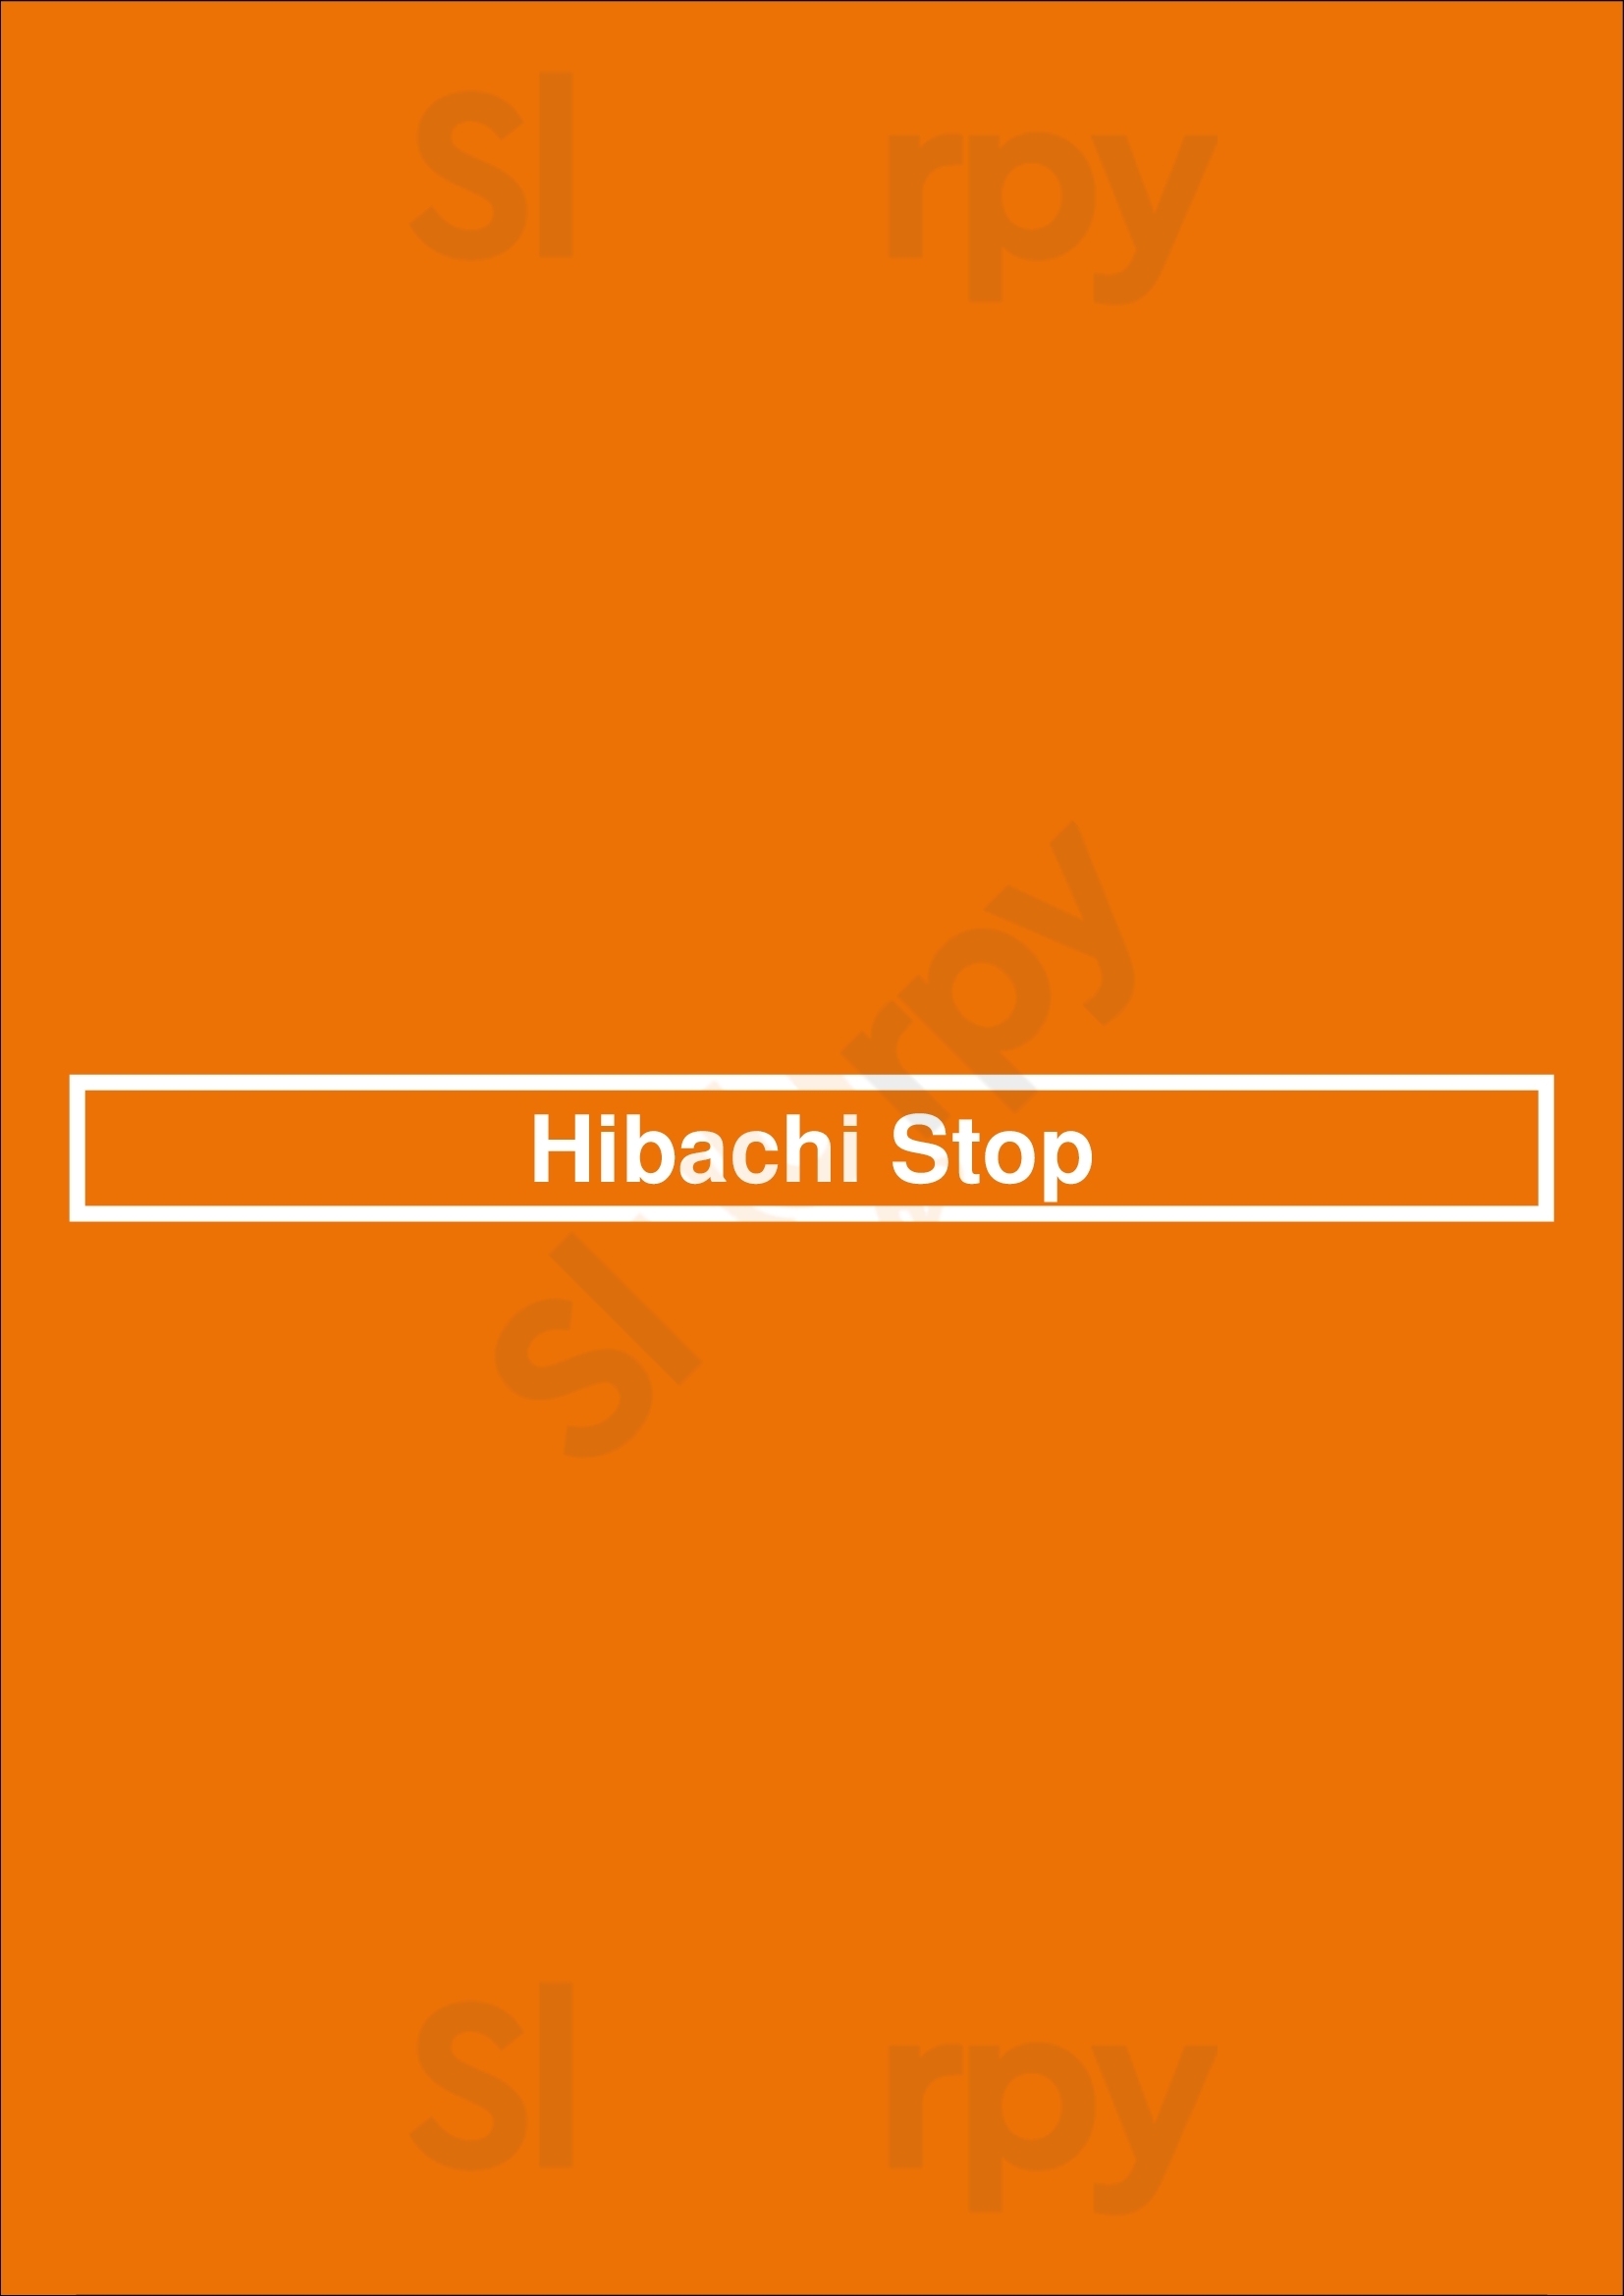 Hibachi Stop Marietta Menu - 1